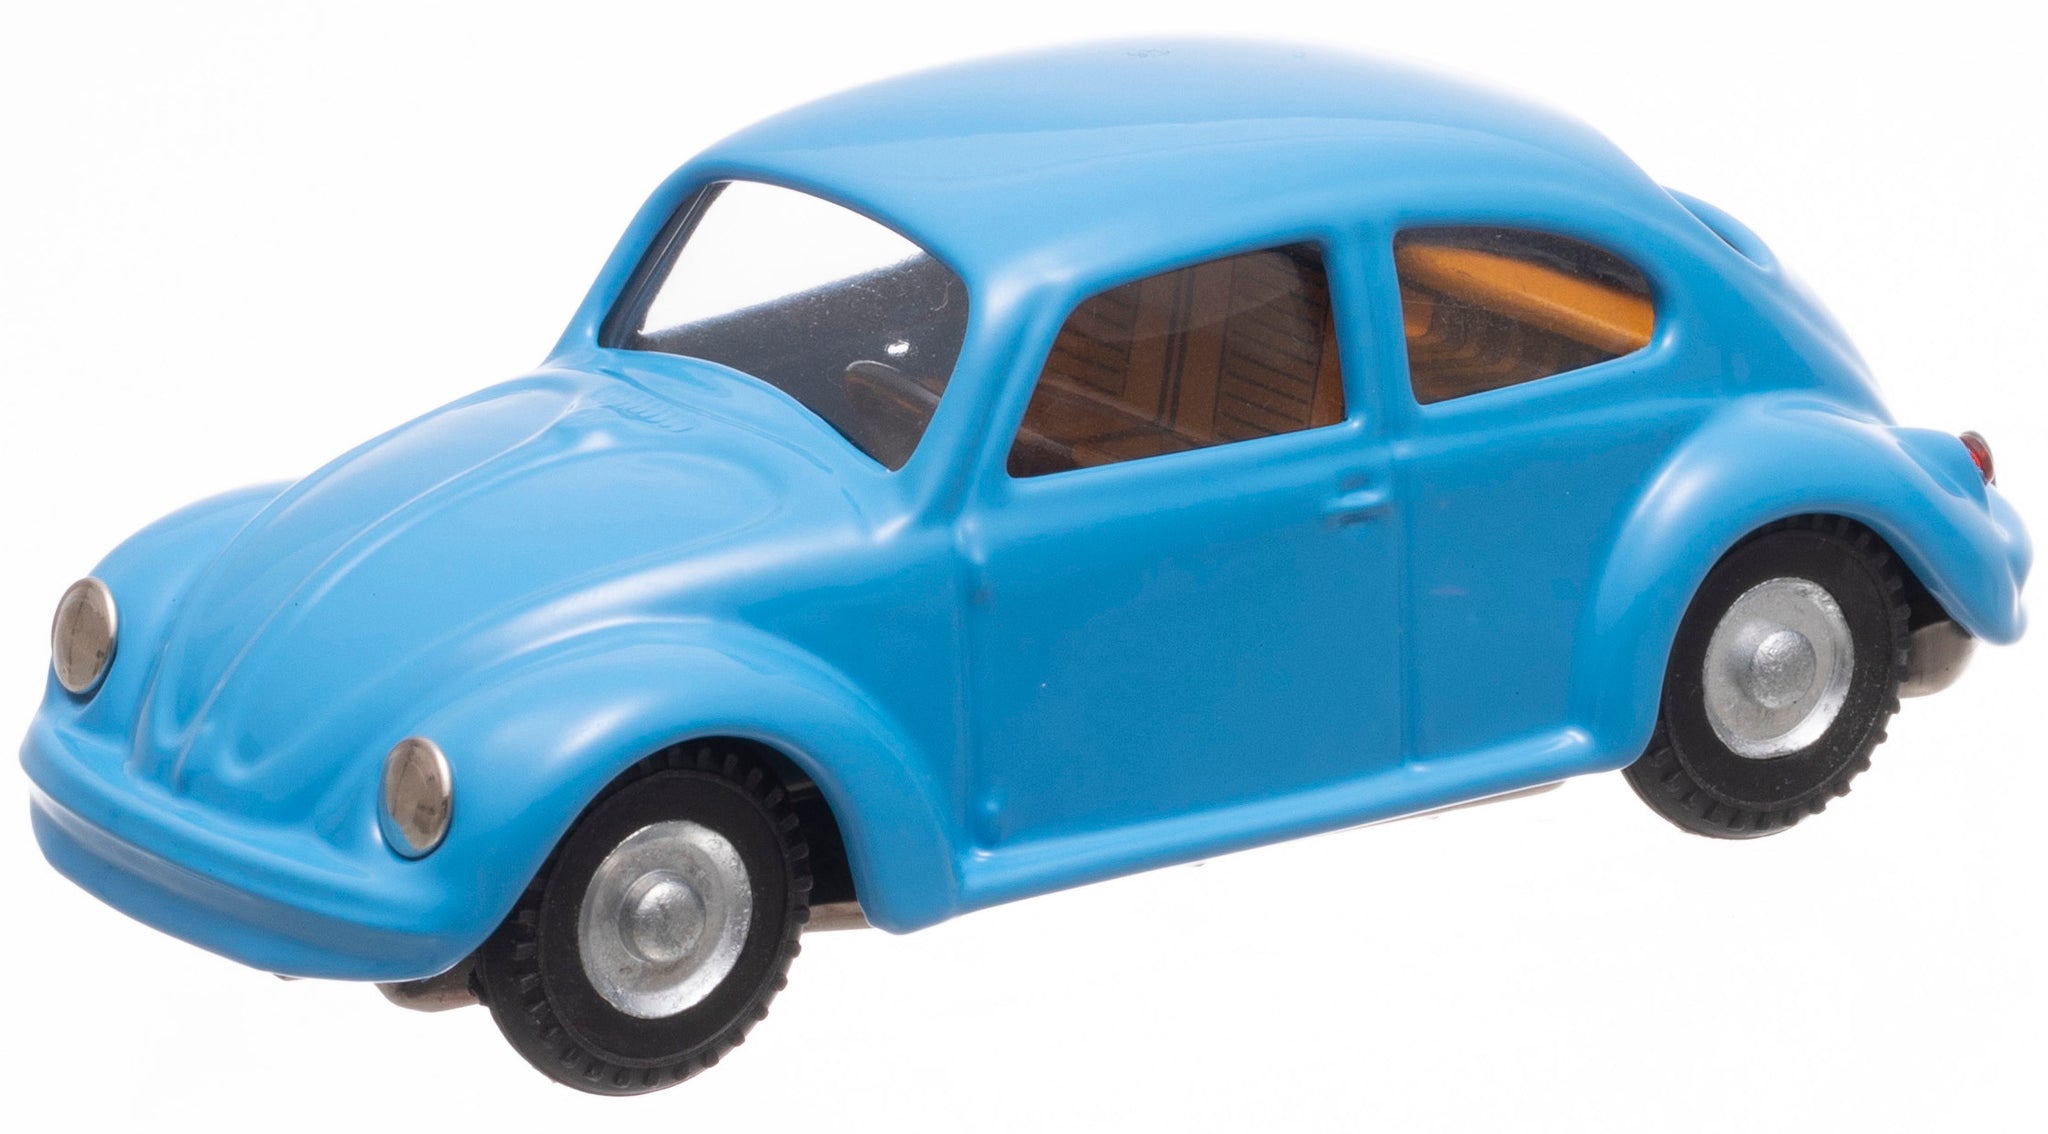 Kovap - VW 1200 Beetle